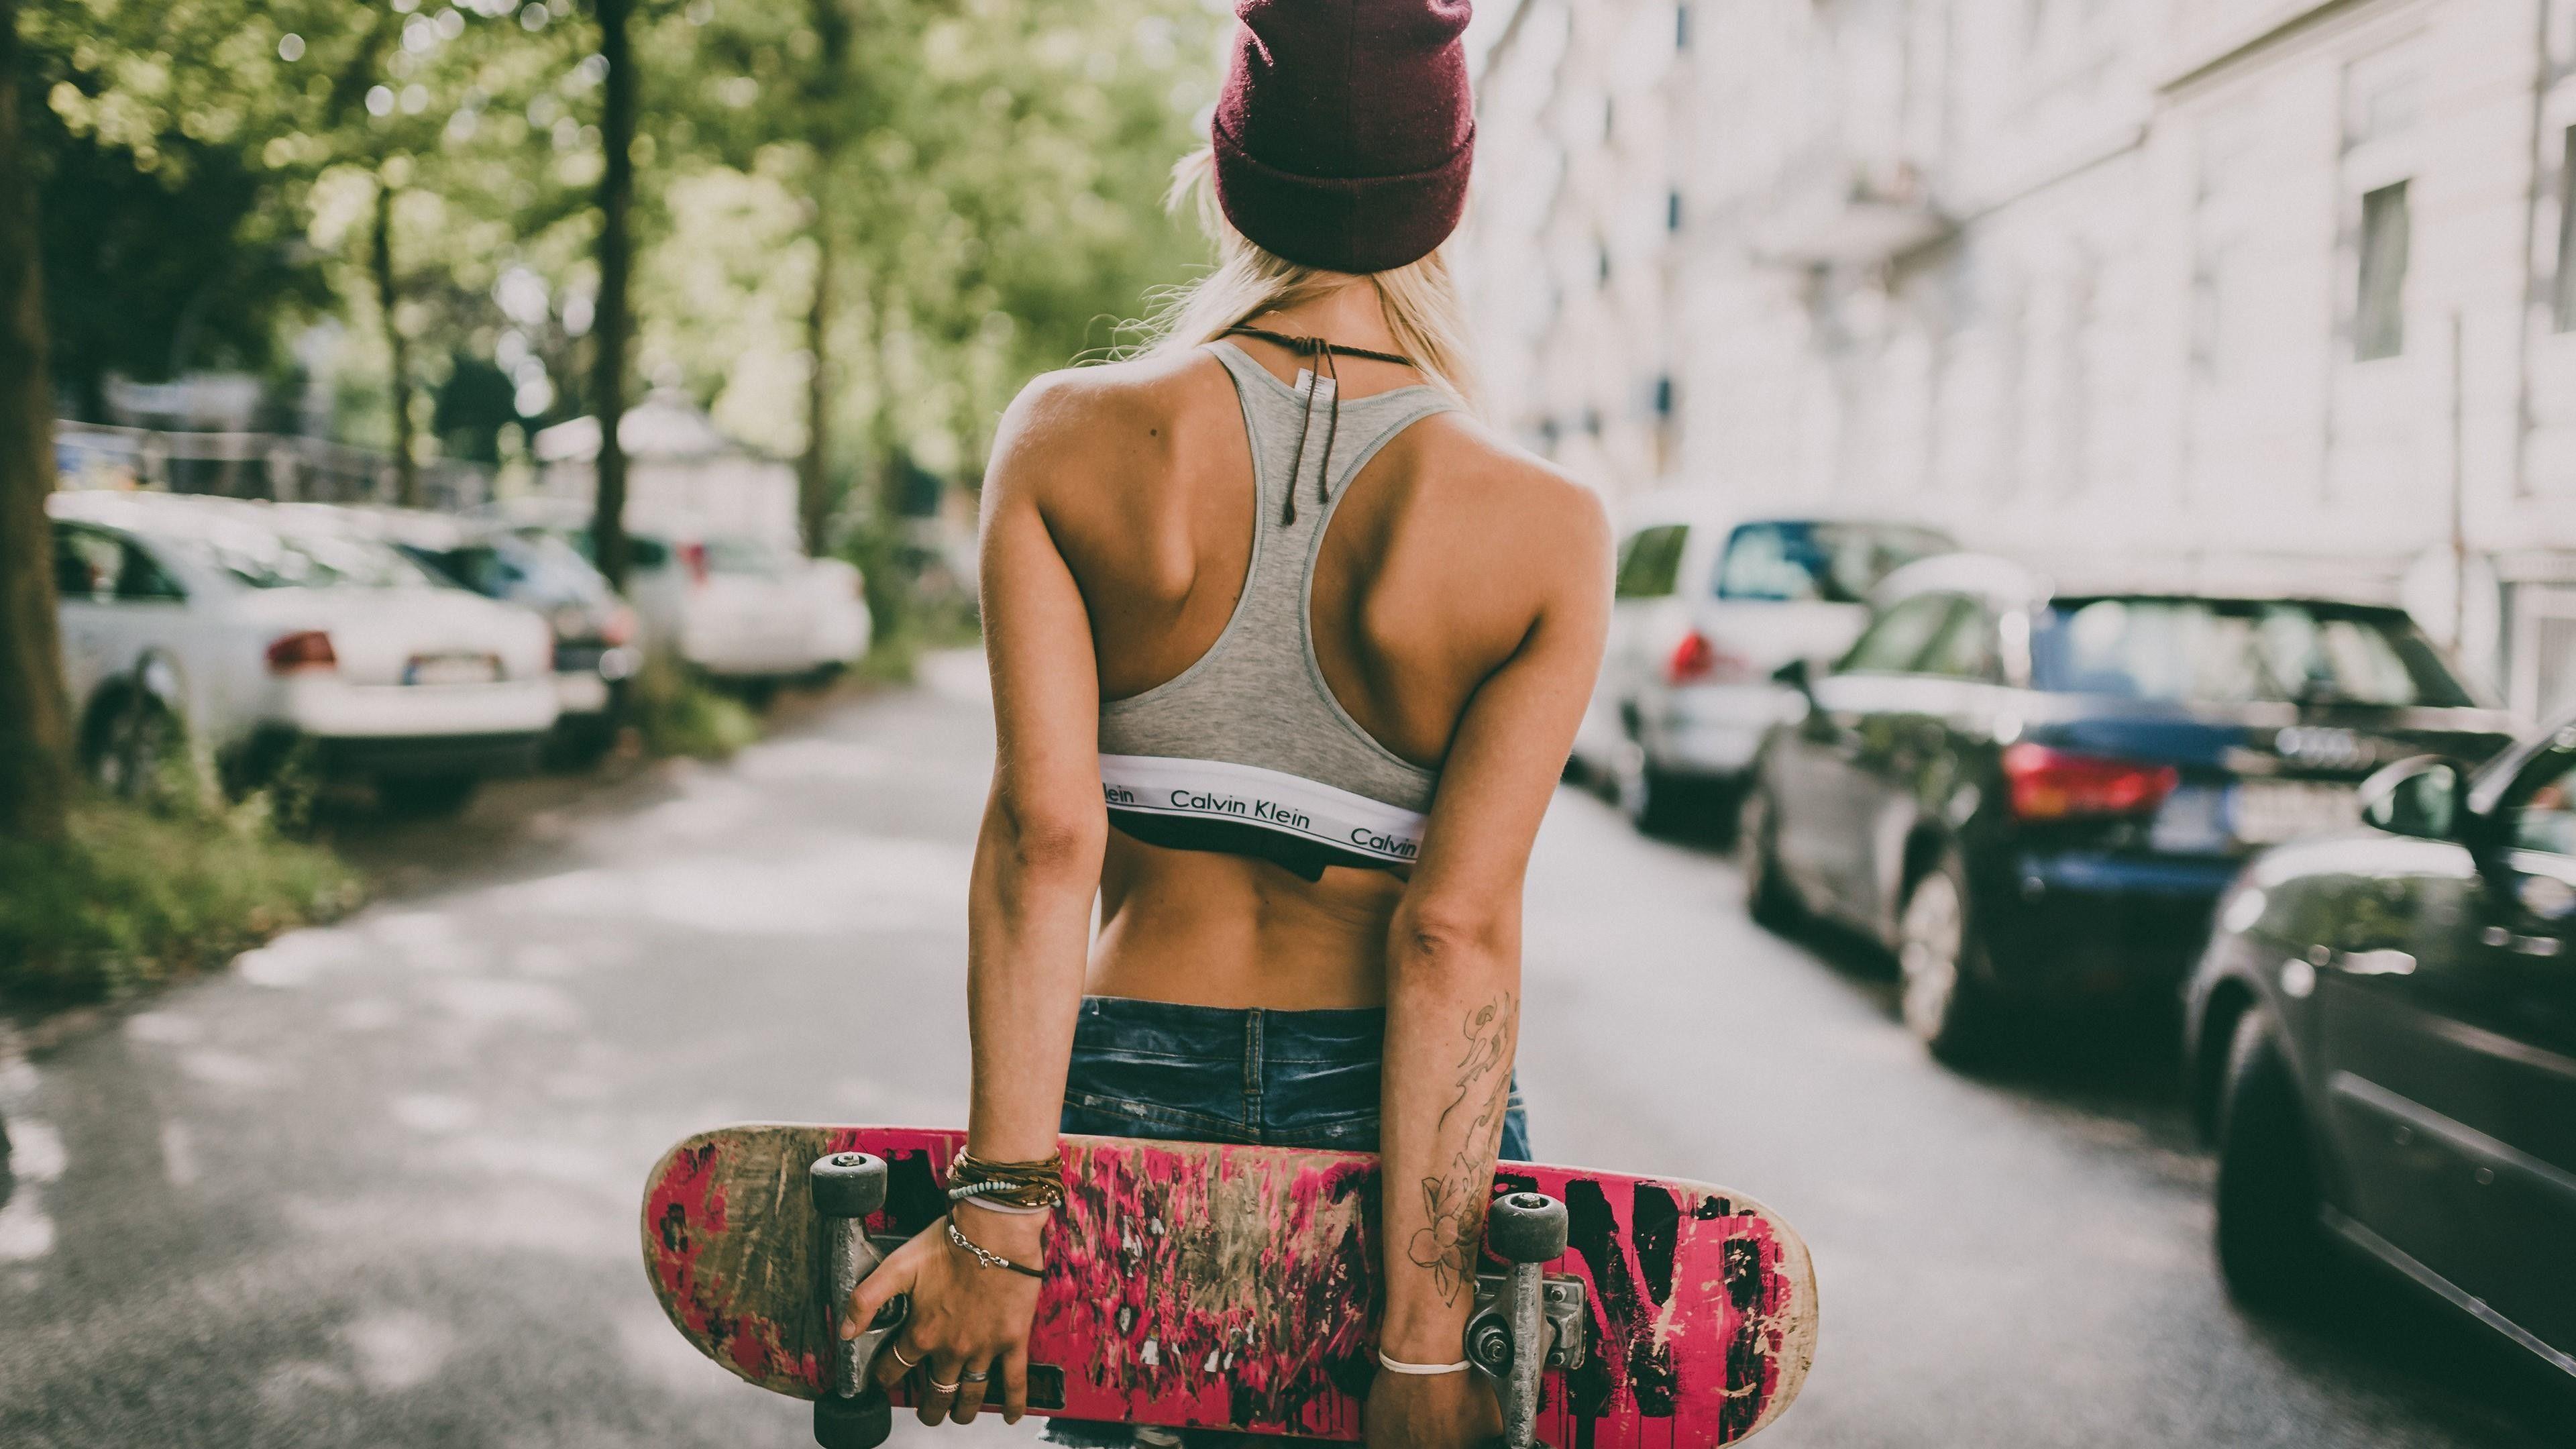 Skateboard Wallpapers  Top Free Skateboard Backgrounds  WallpaperAccess